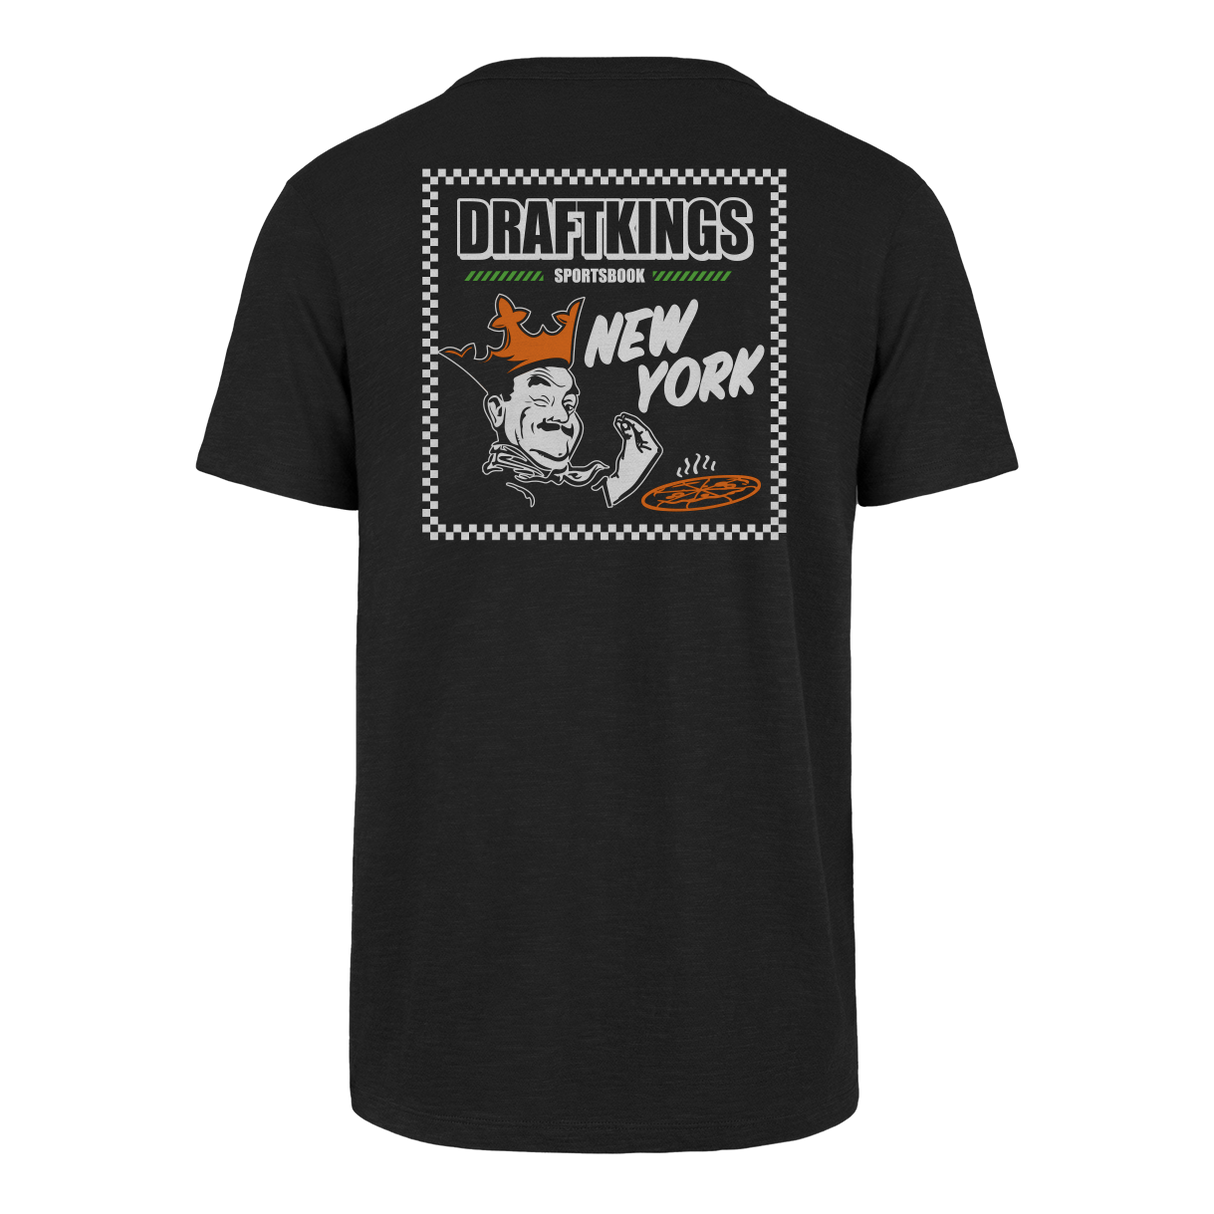 DraftKings New York Sportsbook T-Shirt